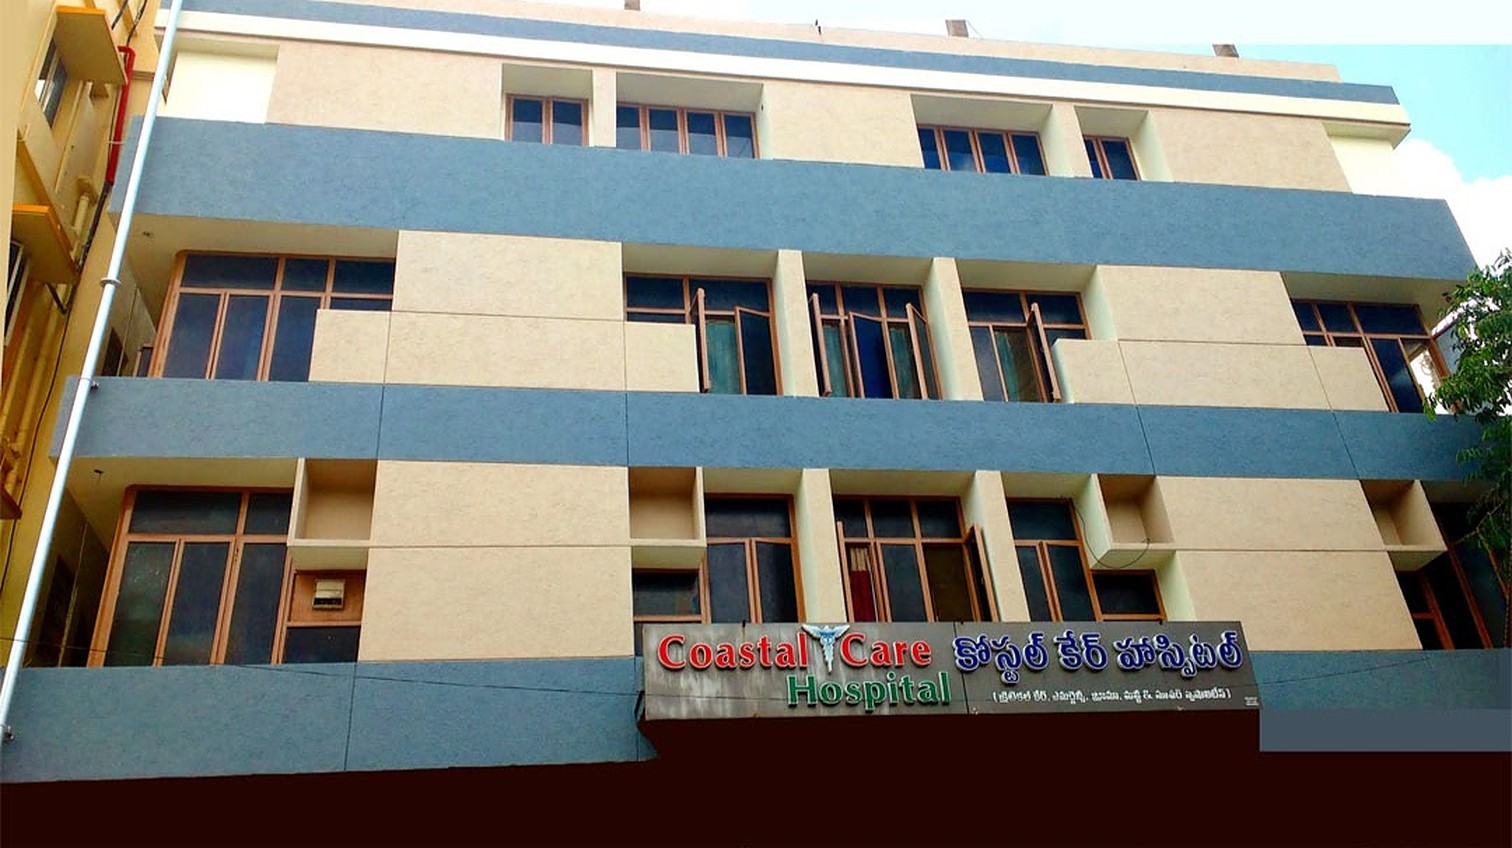 Coastal Care Hospital